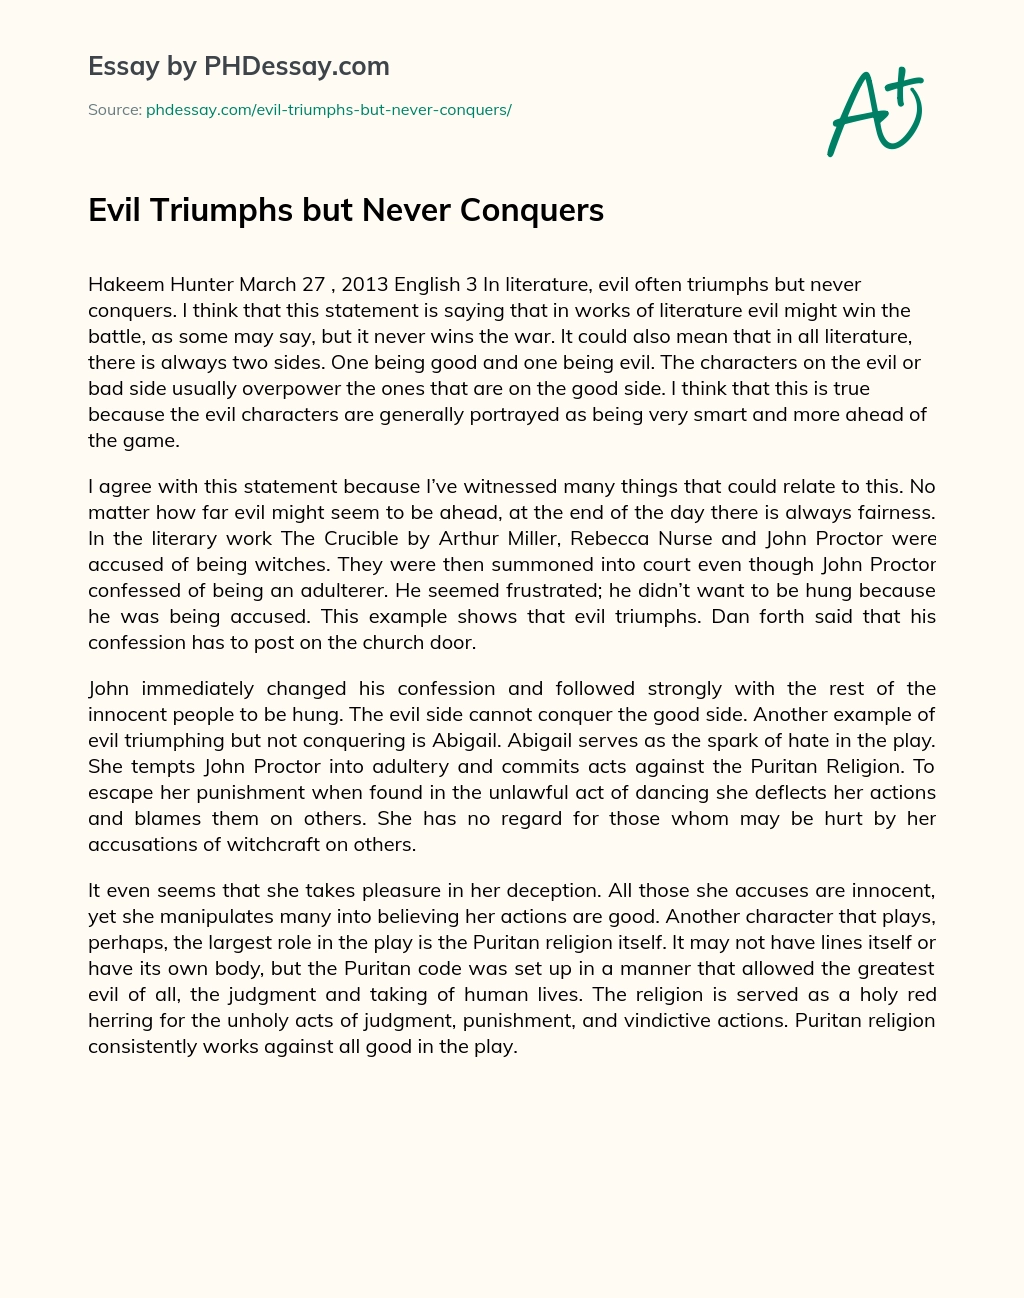 Evil Triumphs but Never Conquers essay